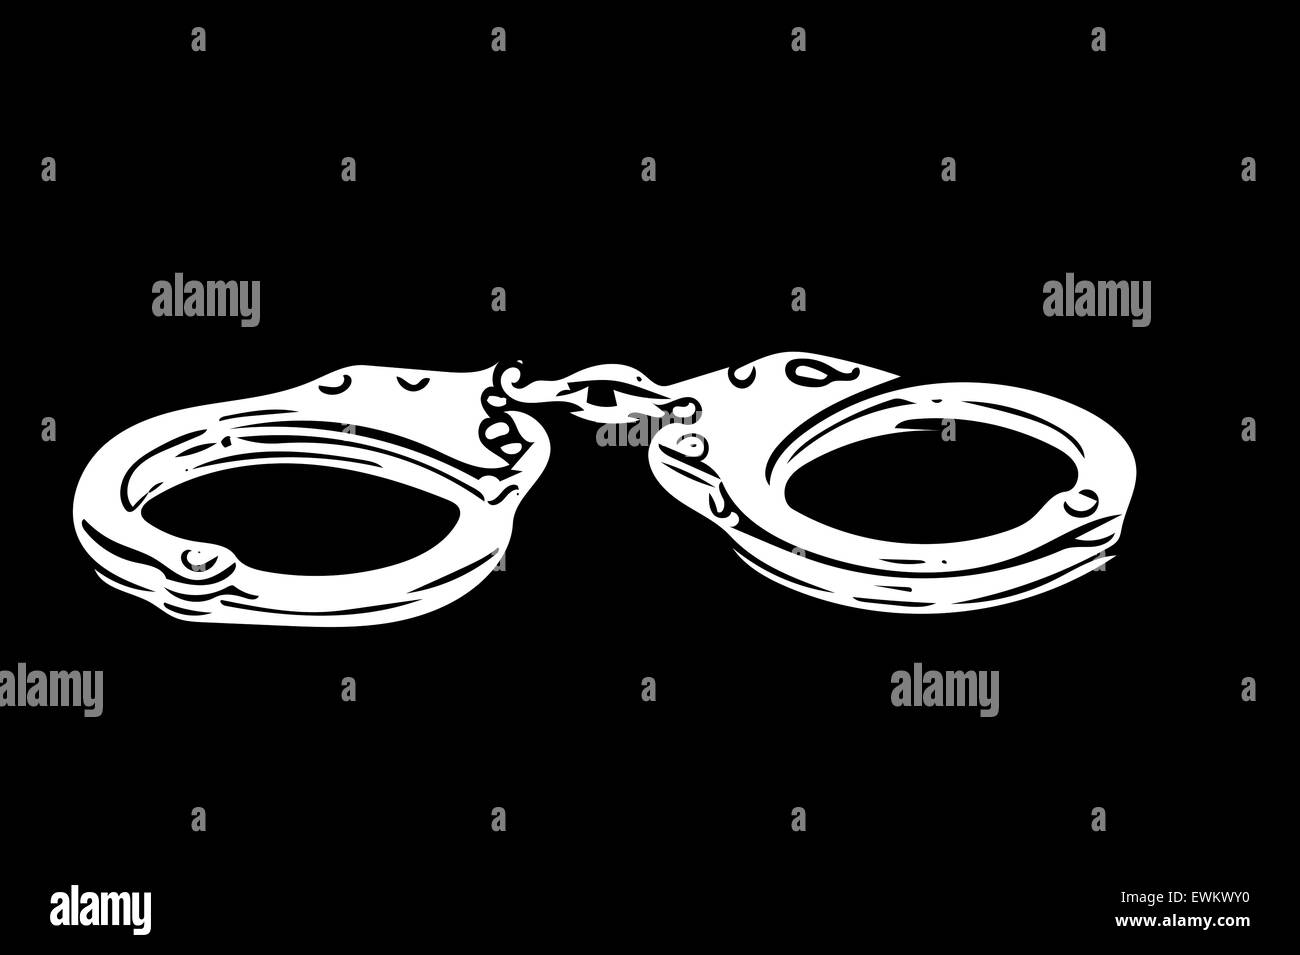 handcuff tied illustrator isolated on black ackground Stock Photo